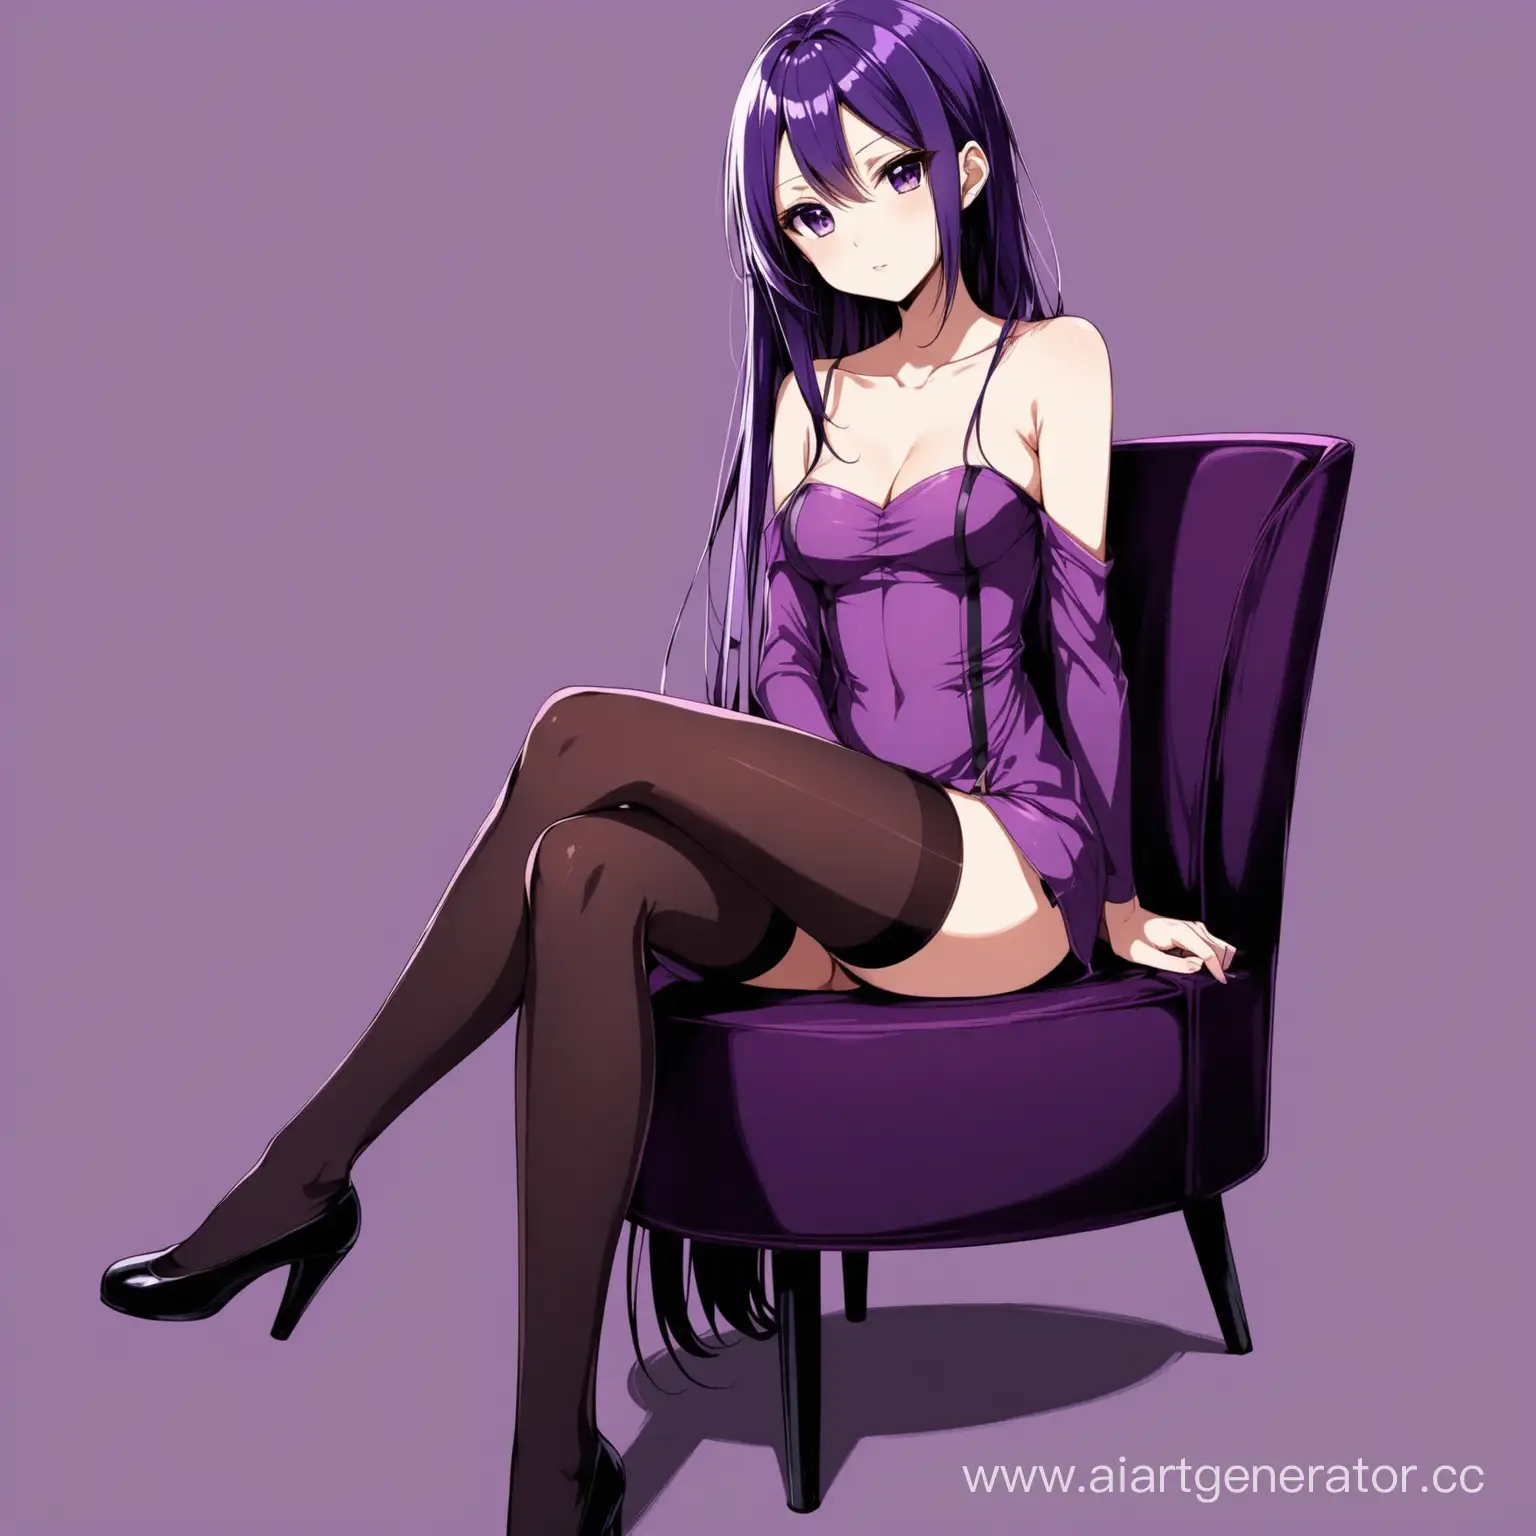 Elegant-Anime-Girl-in-Purple-Outfit-Crosses-Legs-Gracefully